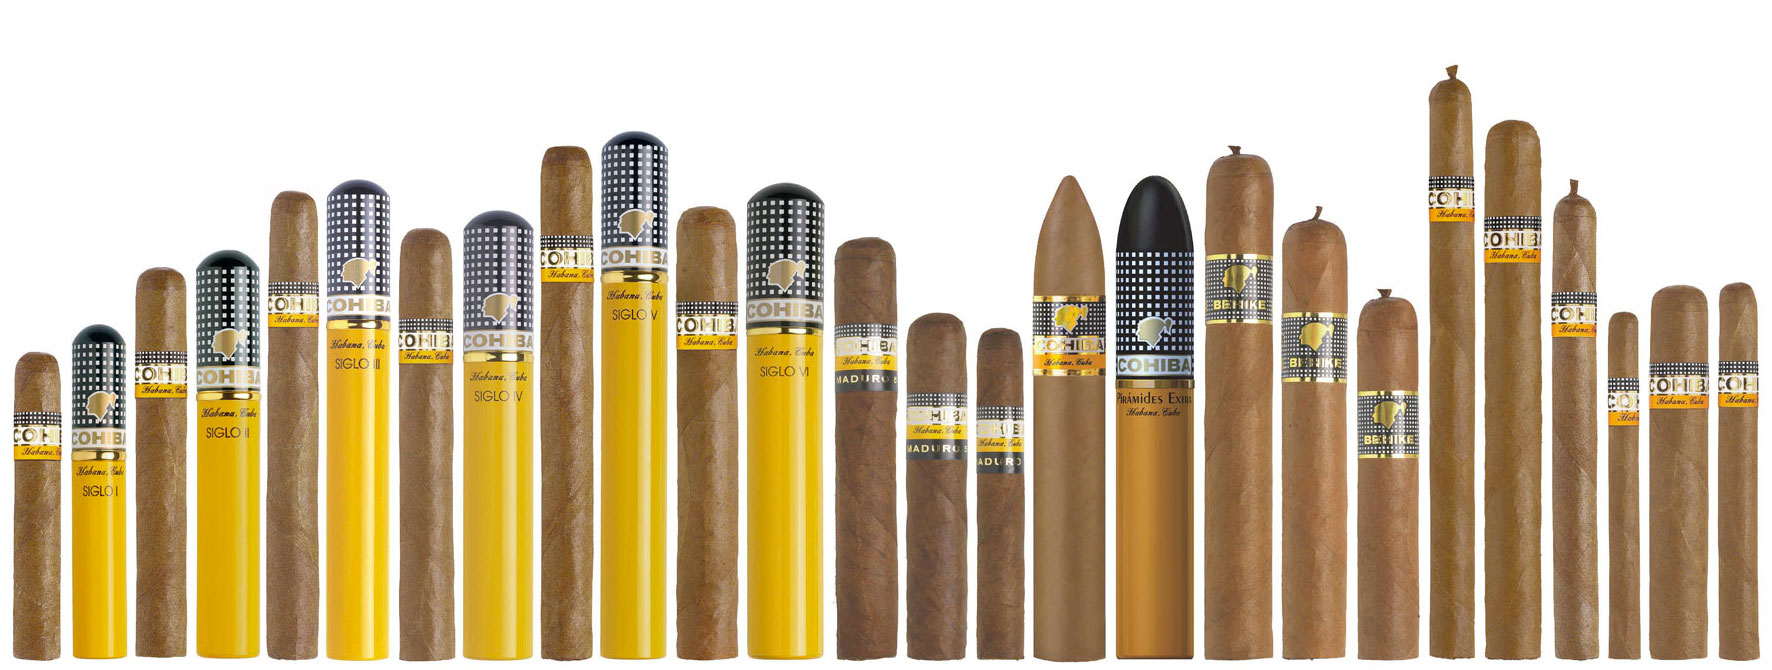 Cohiba Cigar Sizes Chart